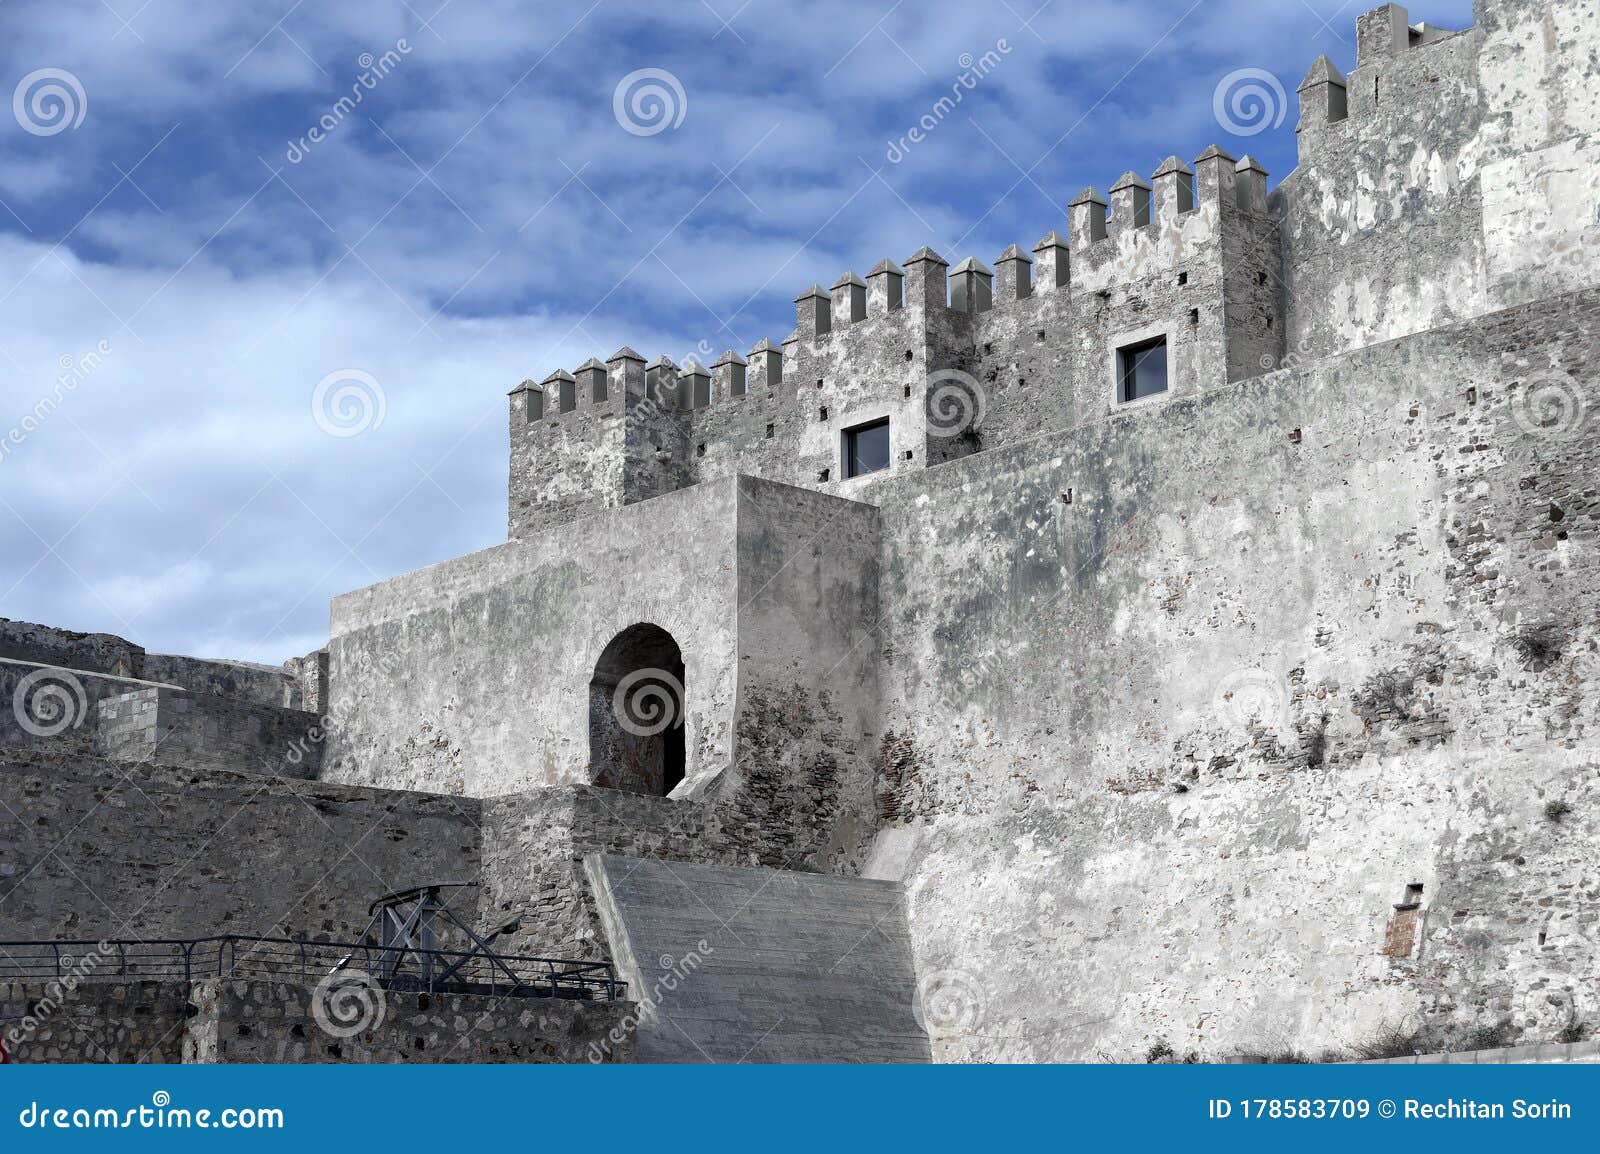 the medieval castle guzman el bueno, tarifa, andalusia, spain.